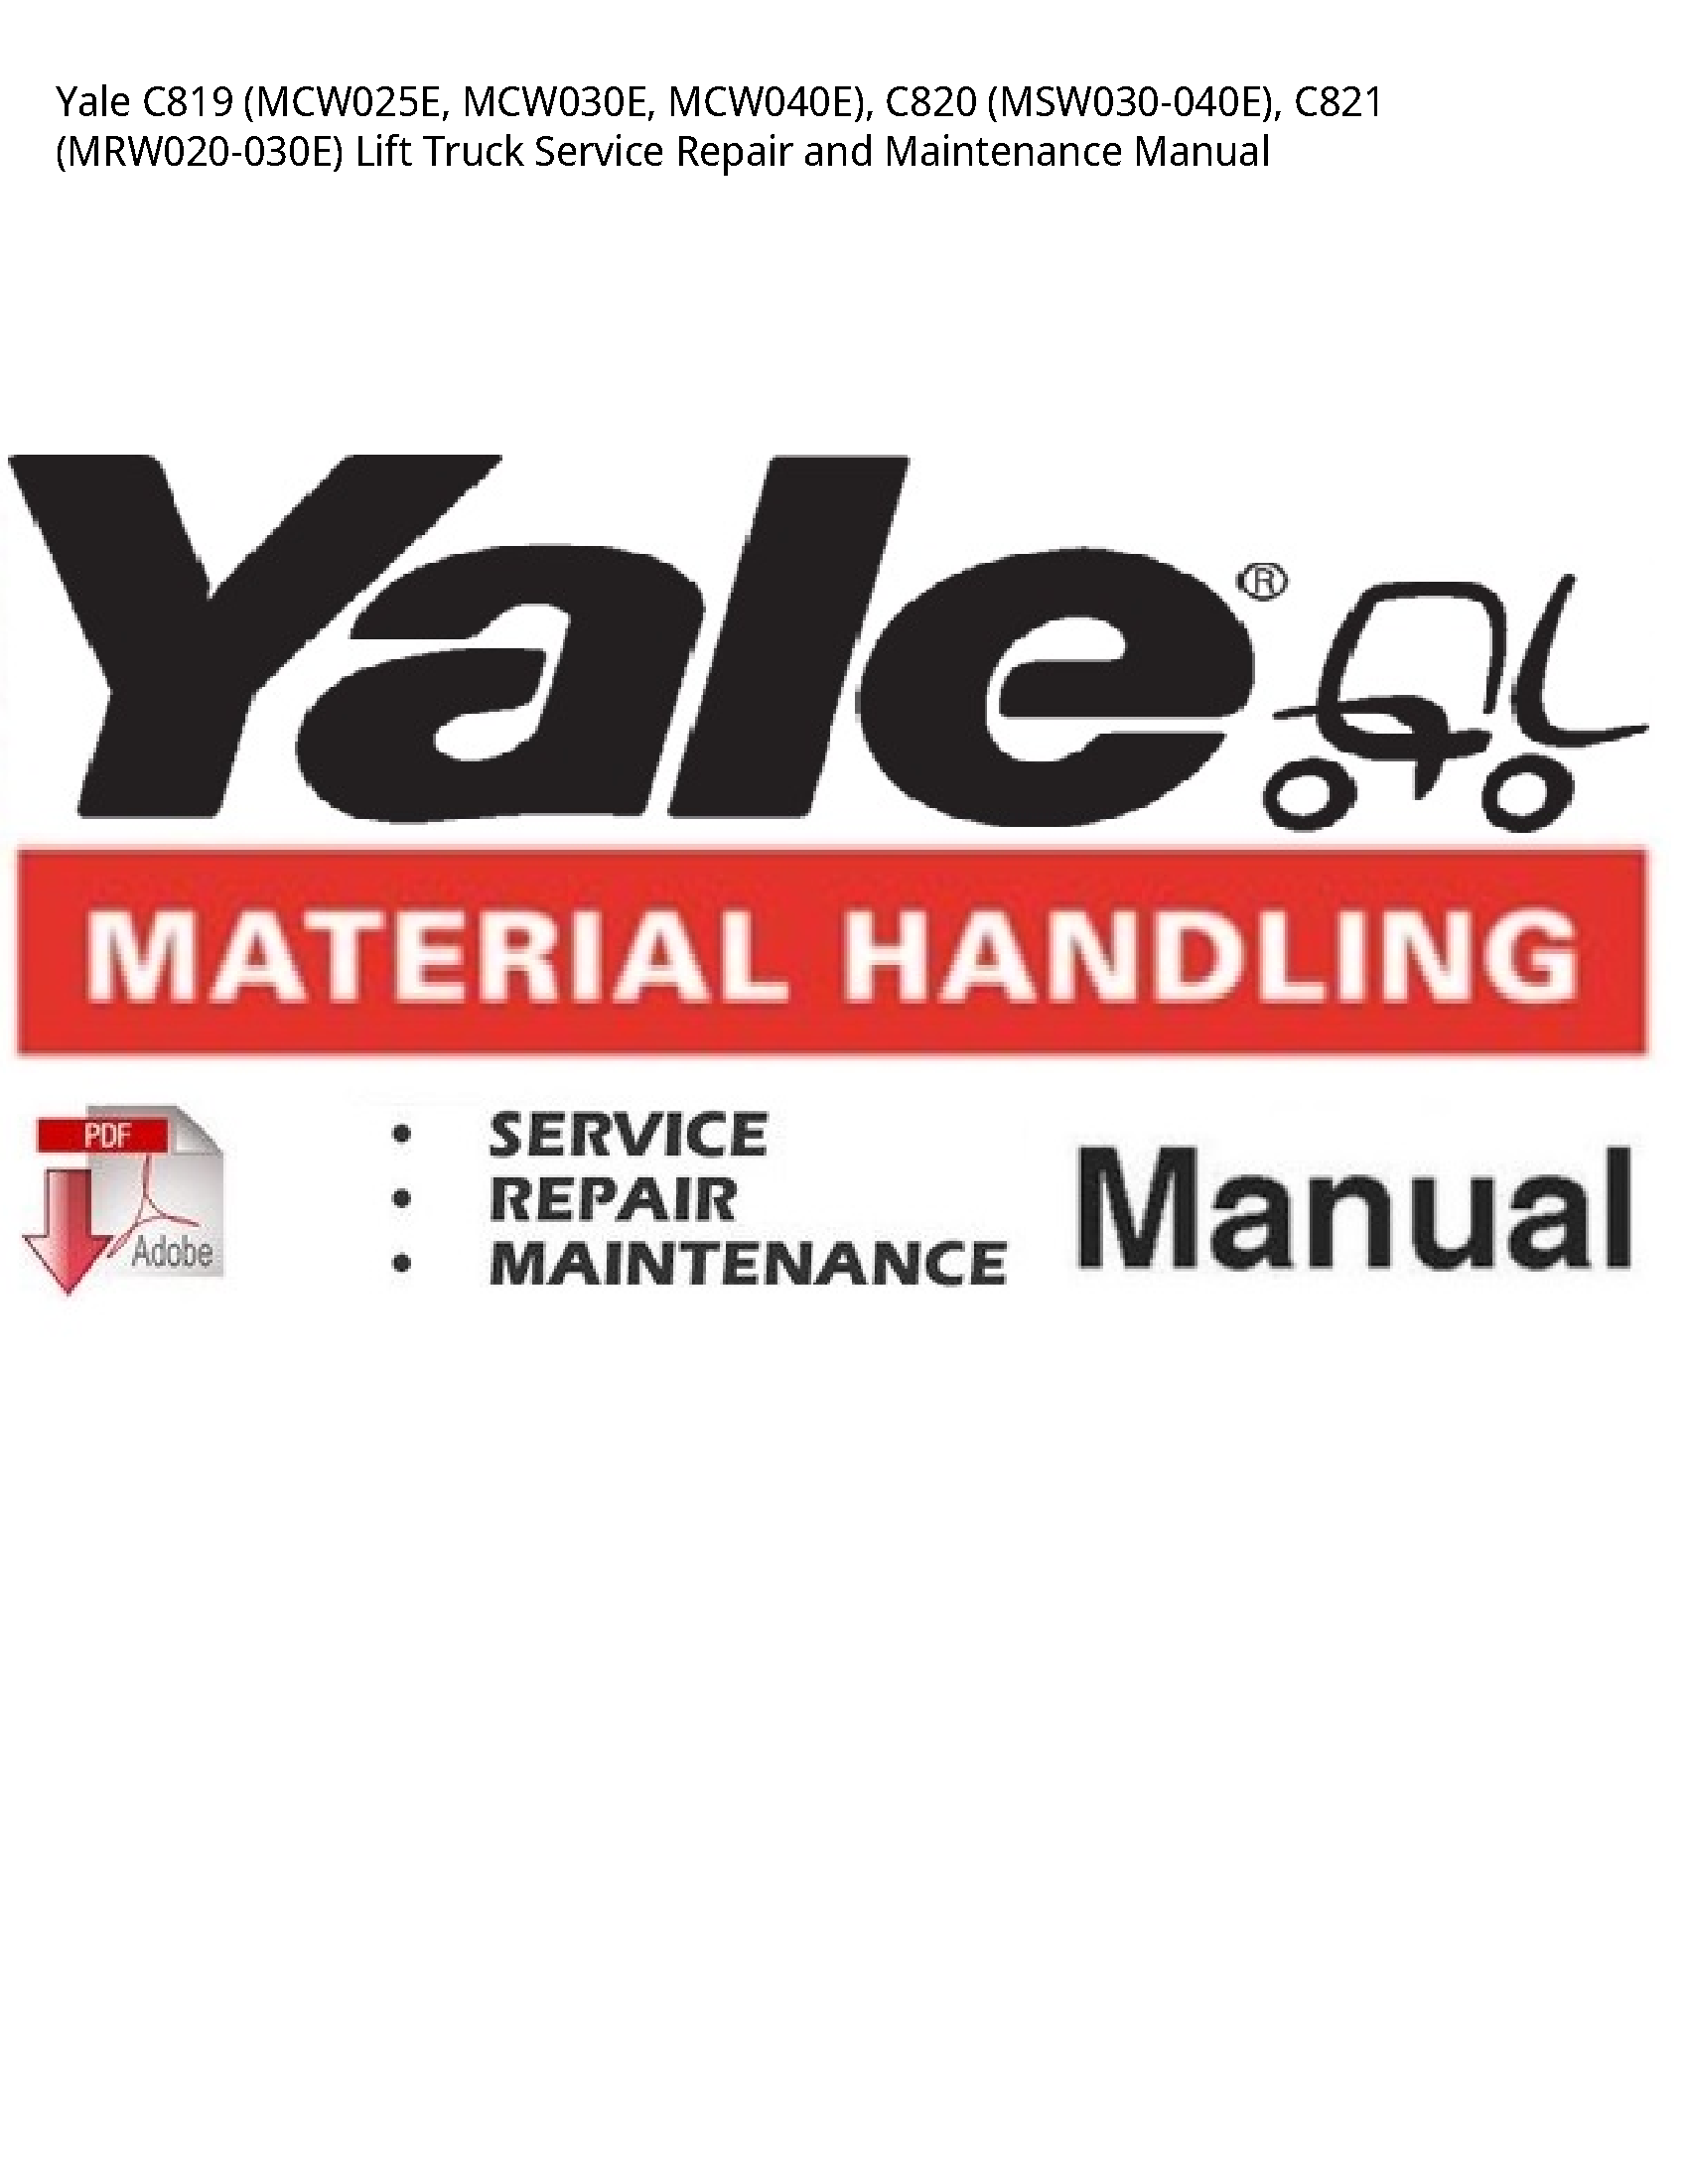 Yale C819 Lift Truck manual